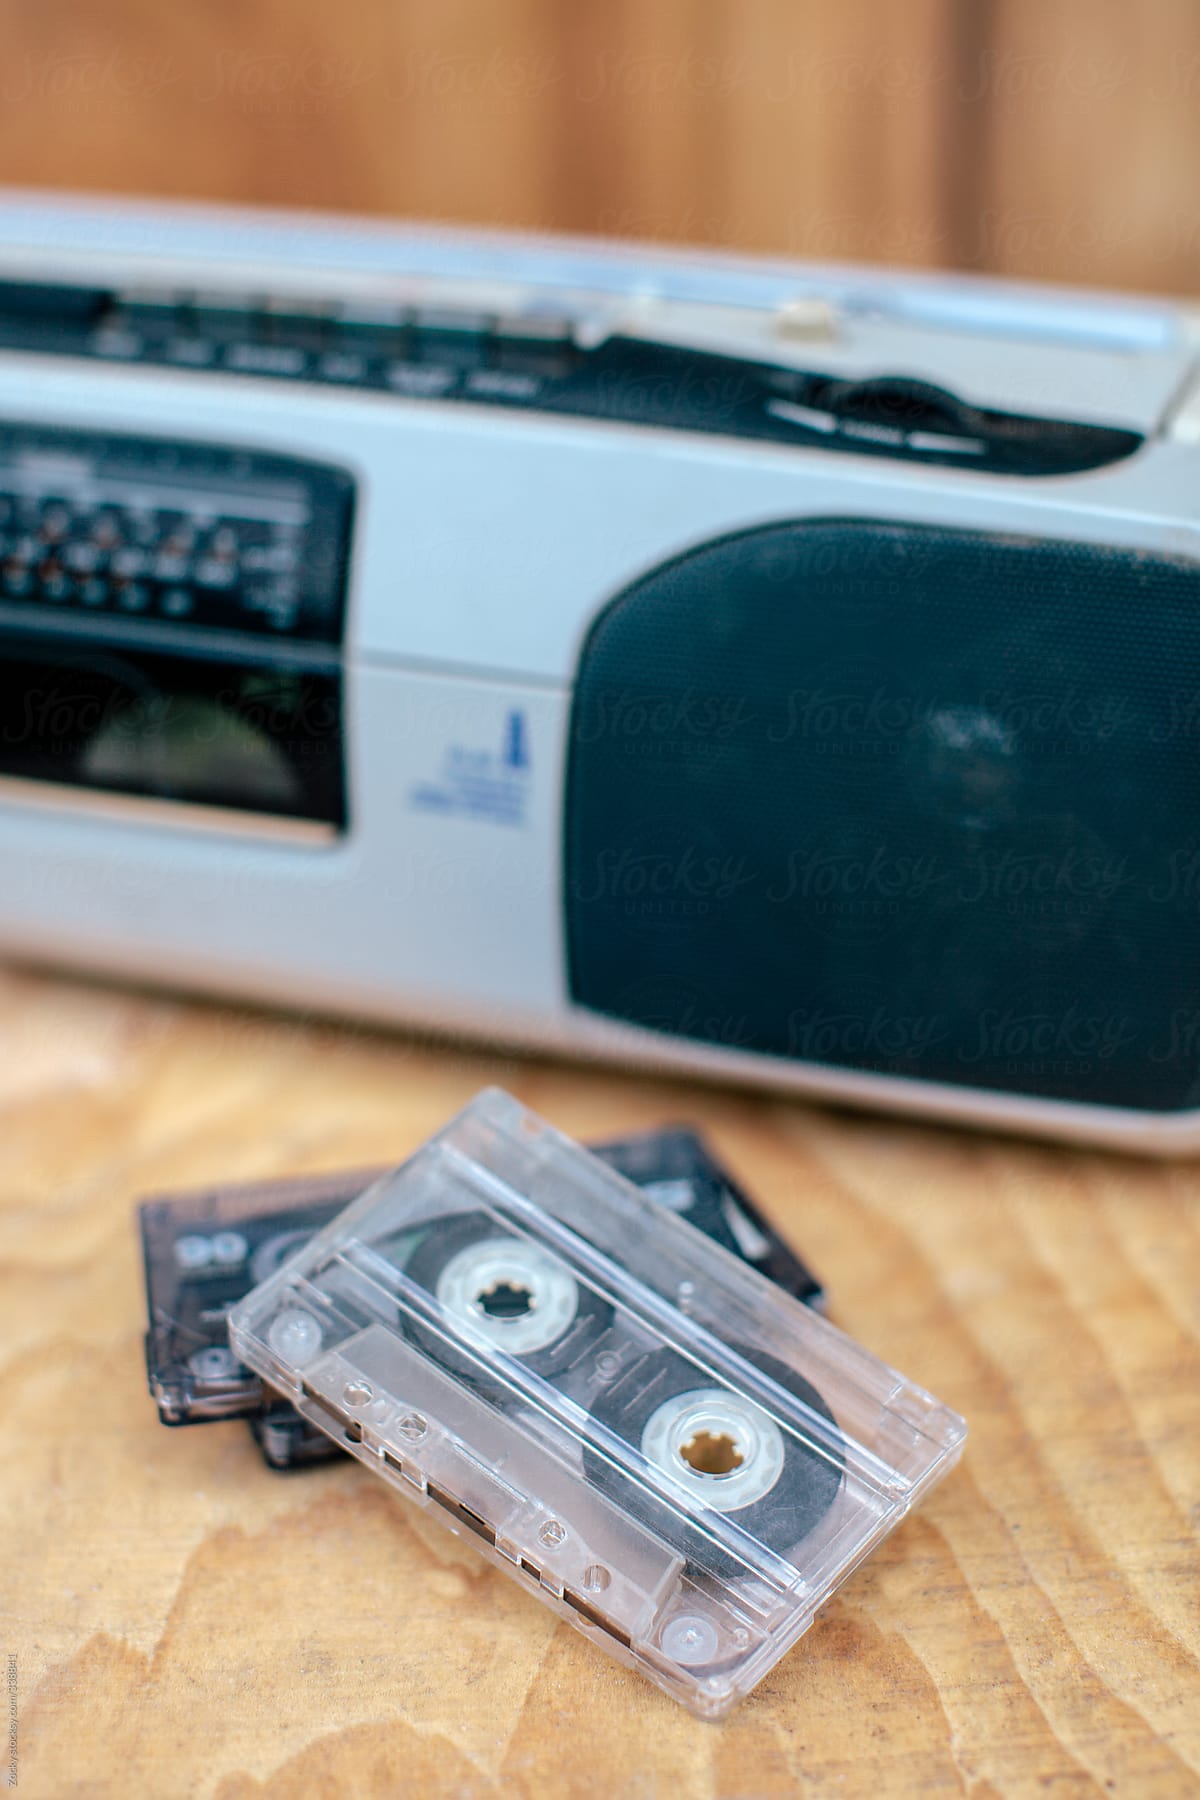 Old cassette tapes